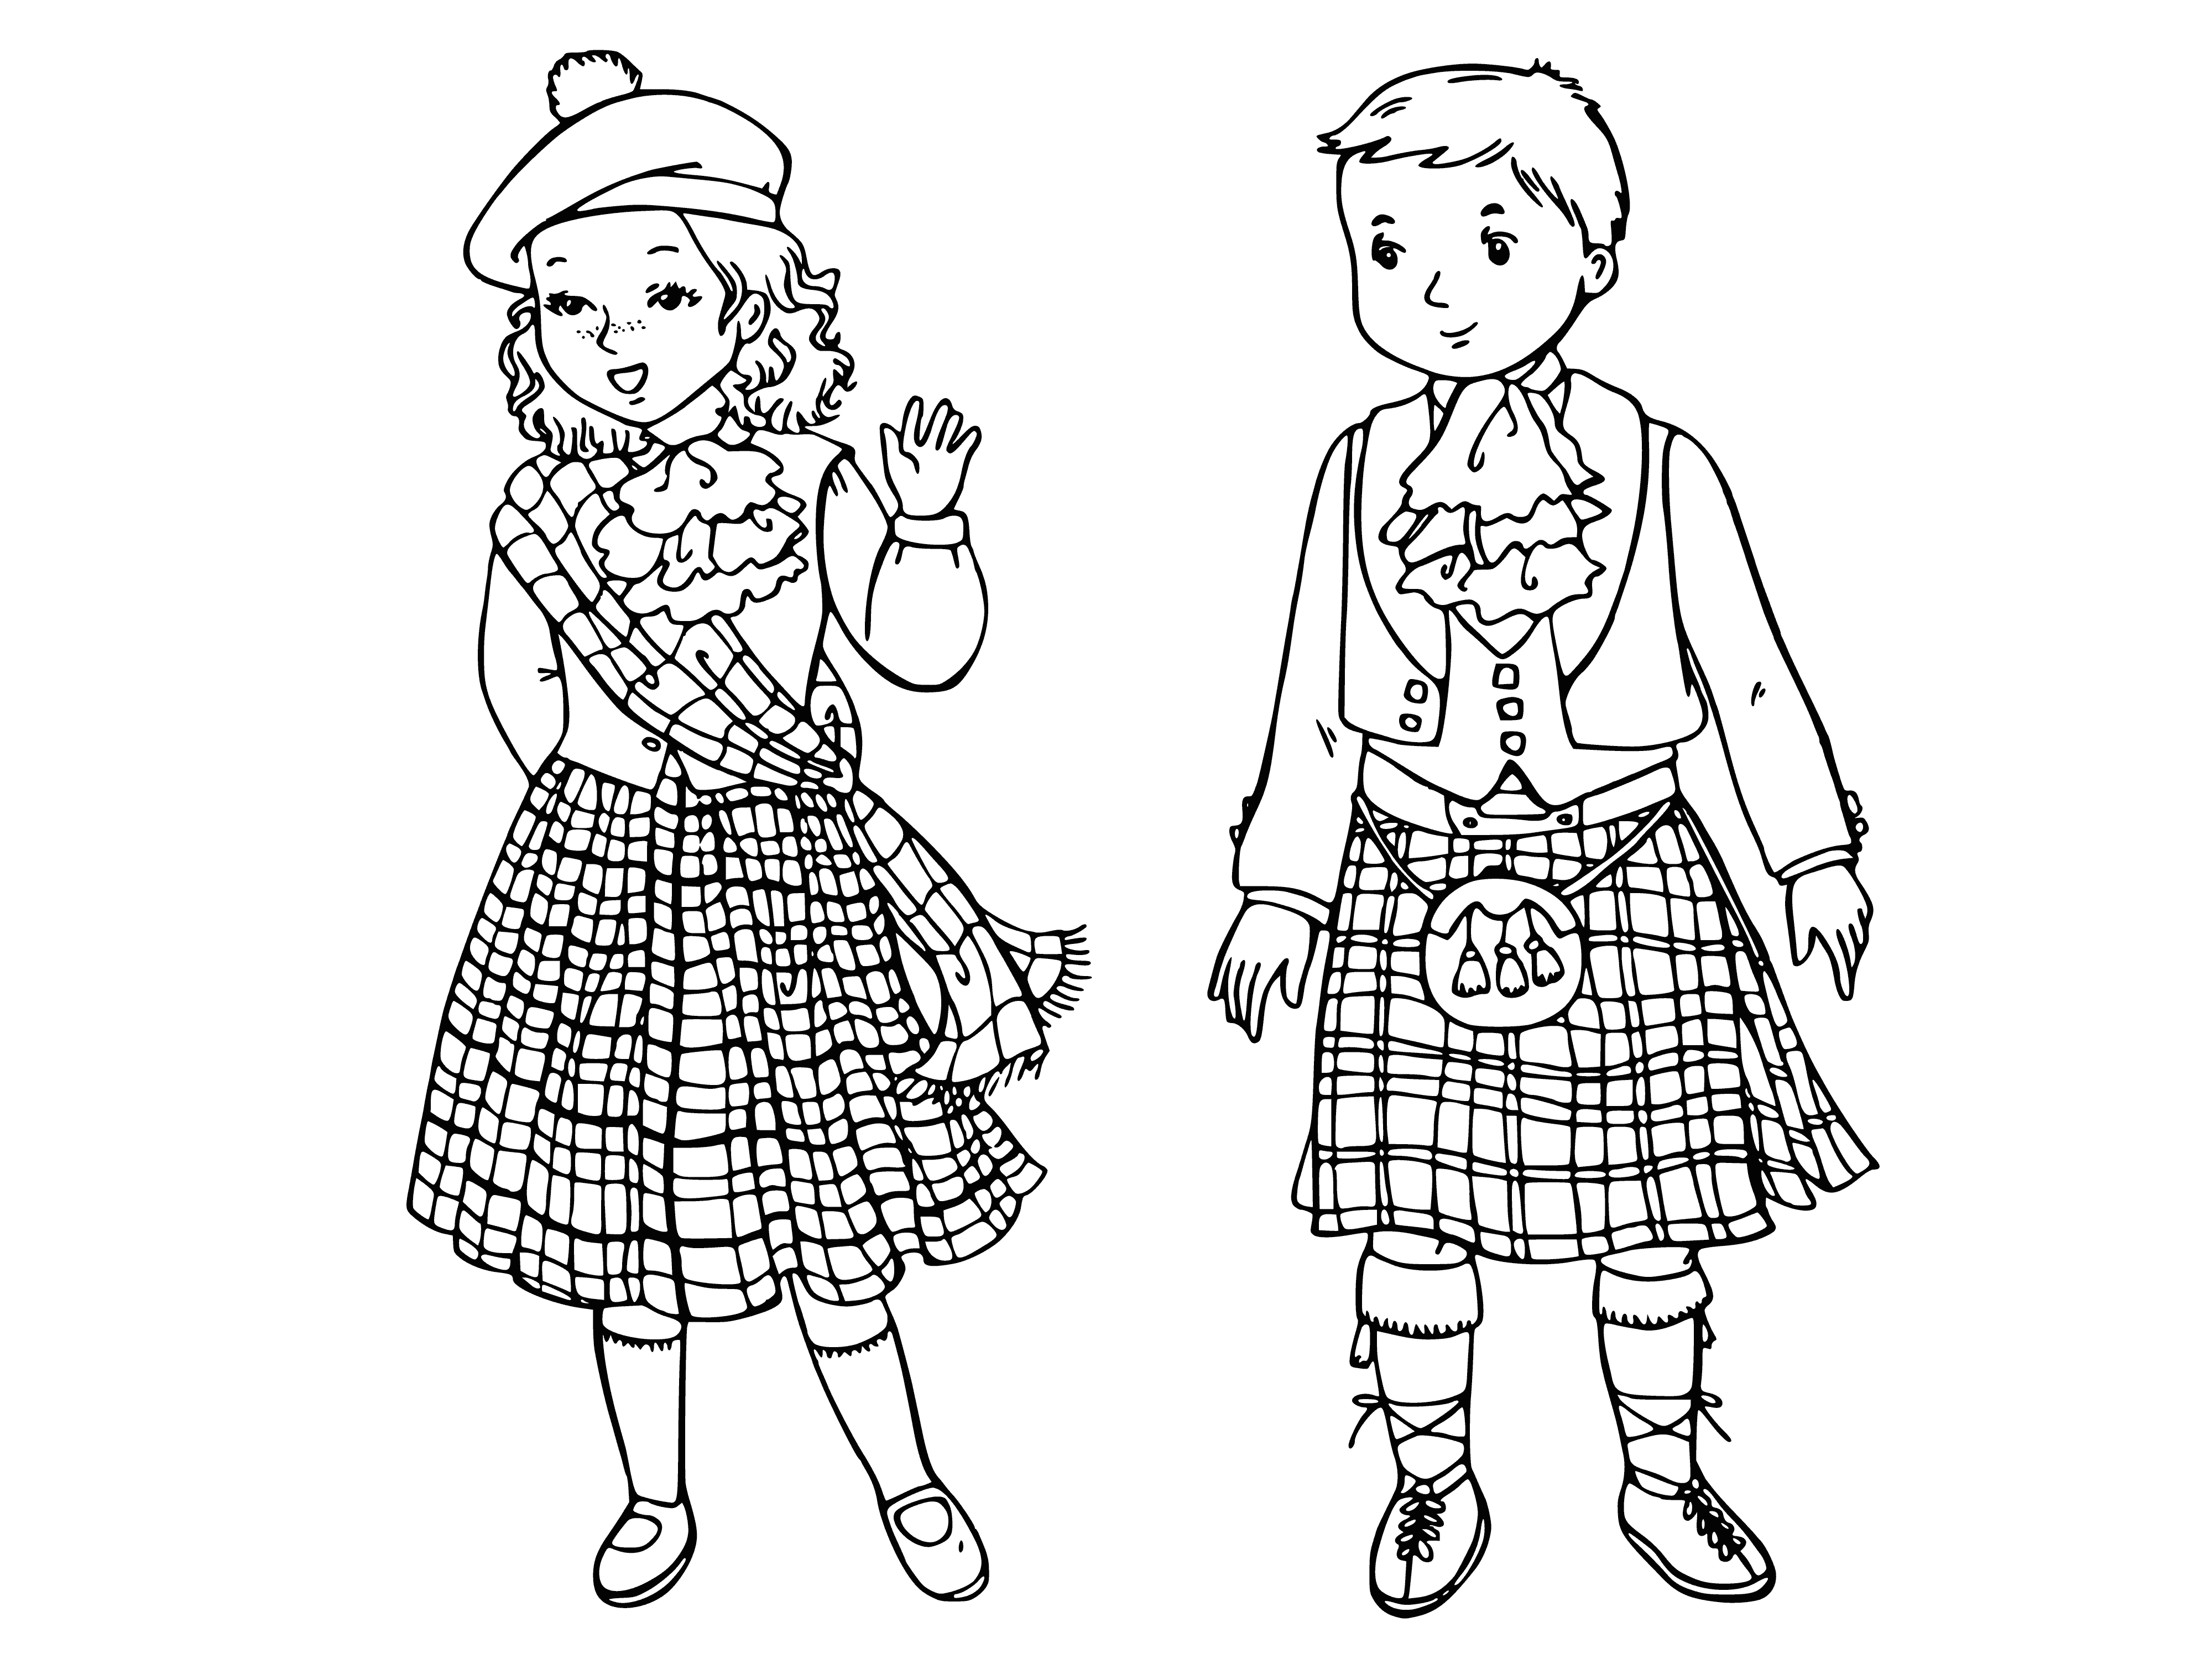 coloring page: Two Scottish children in traditional attire: boy w/ kilt, sporran & girl w/ tartan skirt, blouse & shawl.